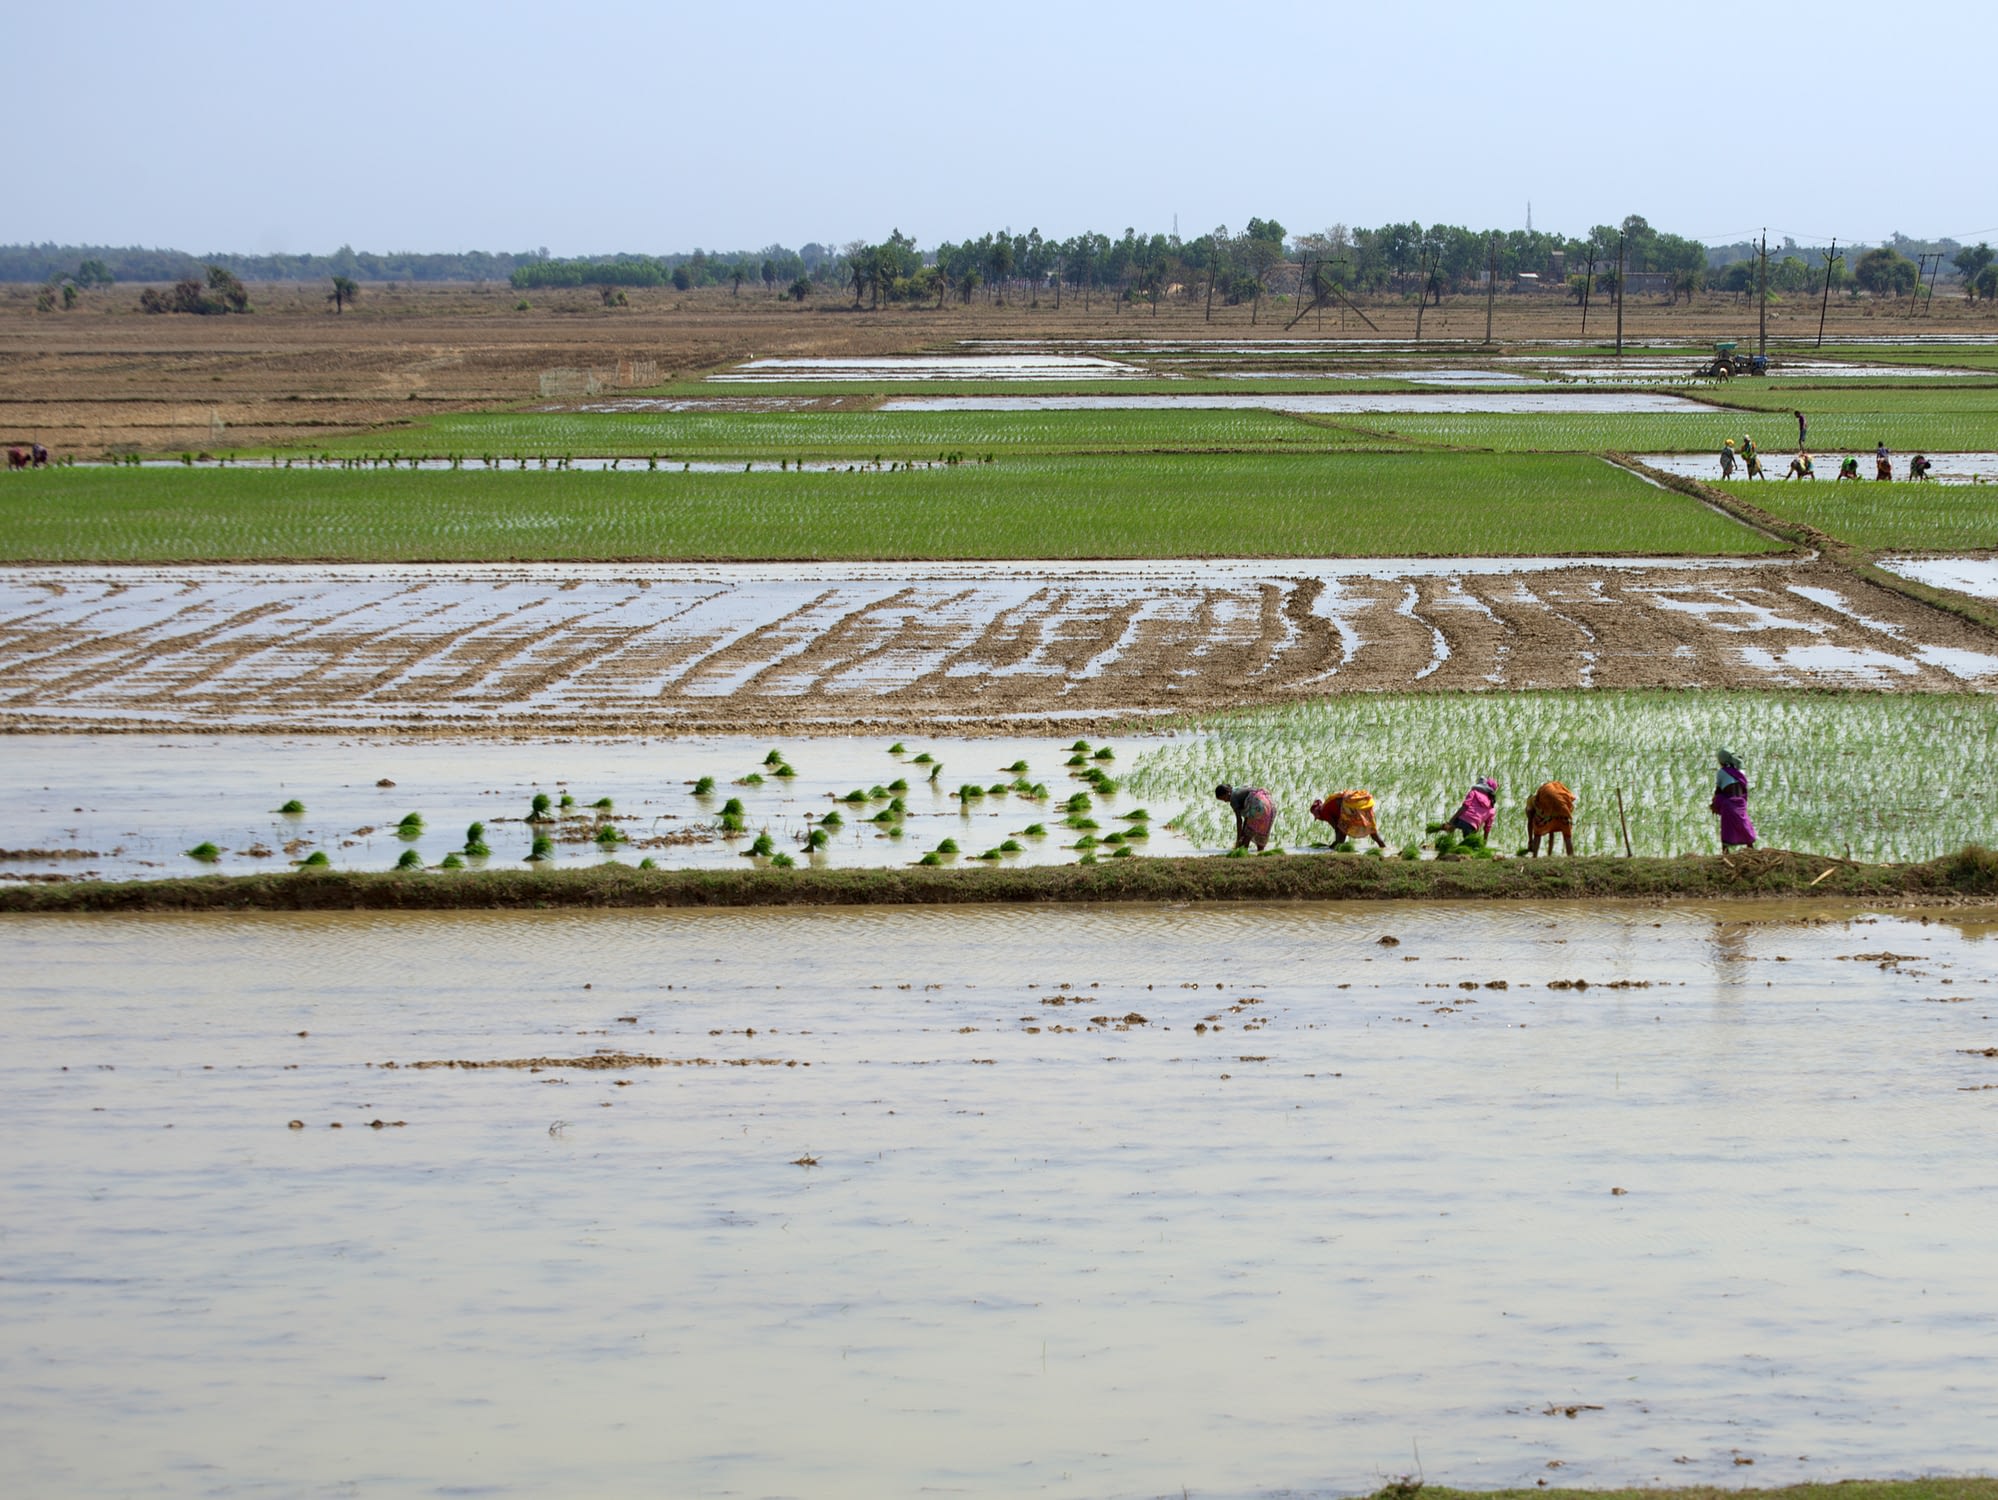 Farmers work on rice paddies. (Photo: Dakshinamurthy Vedachalam/CIMMYT)